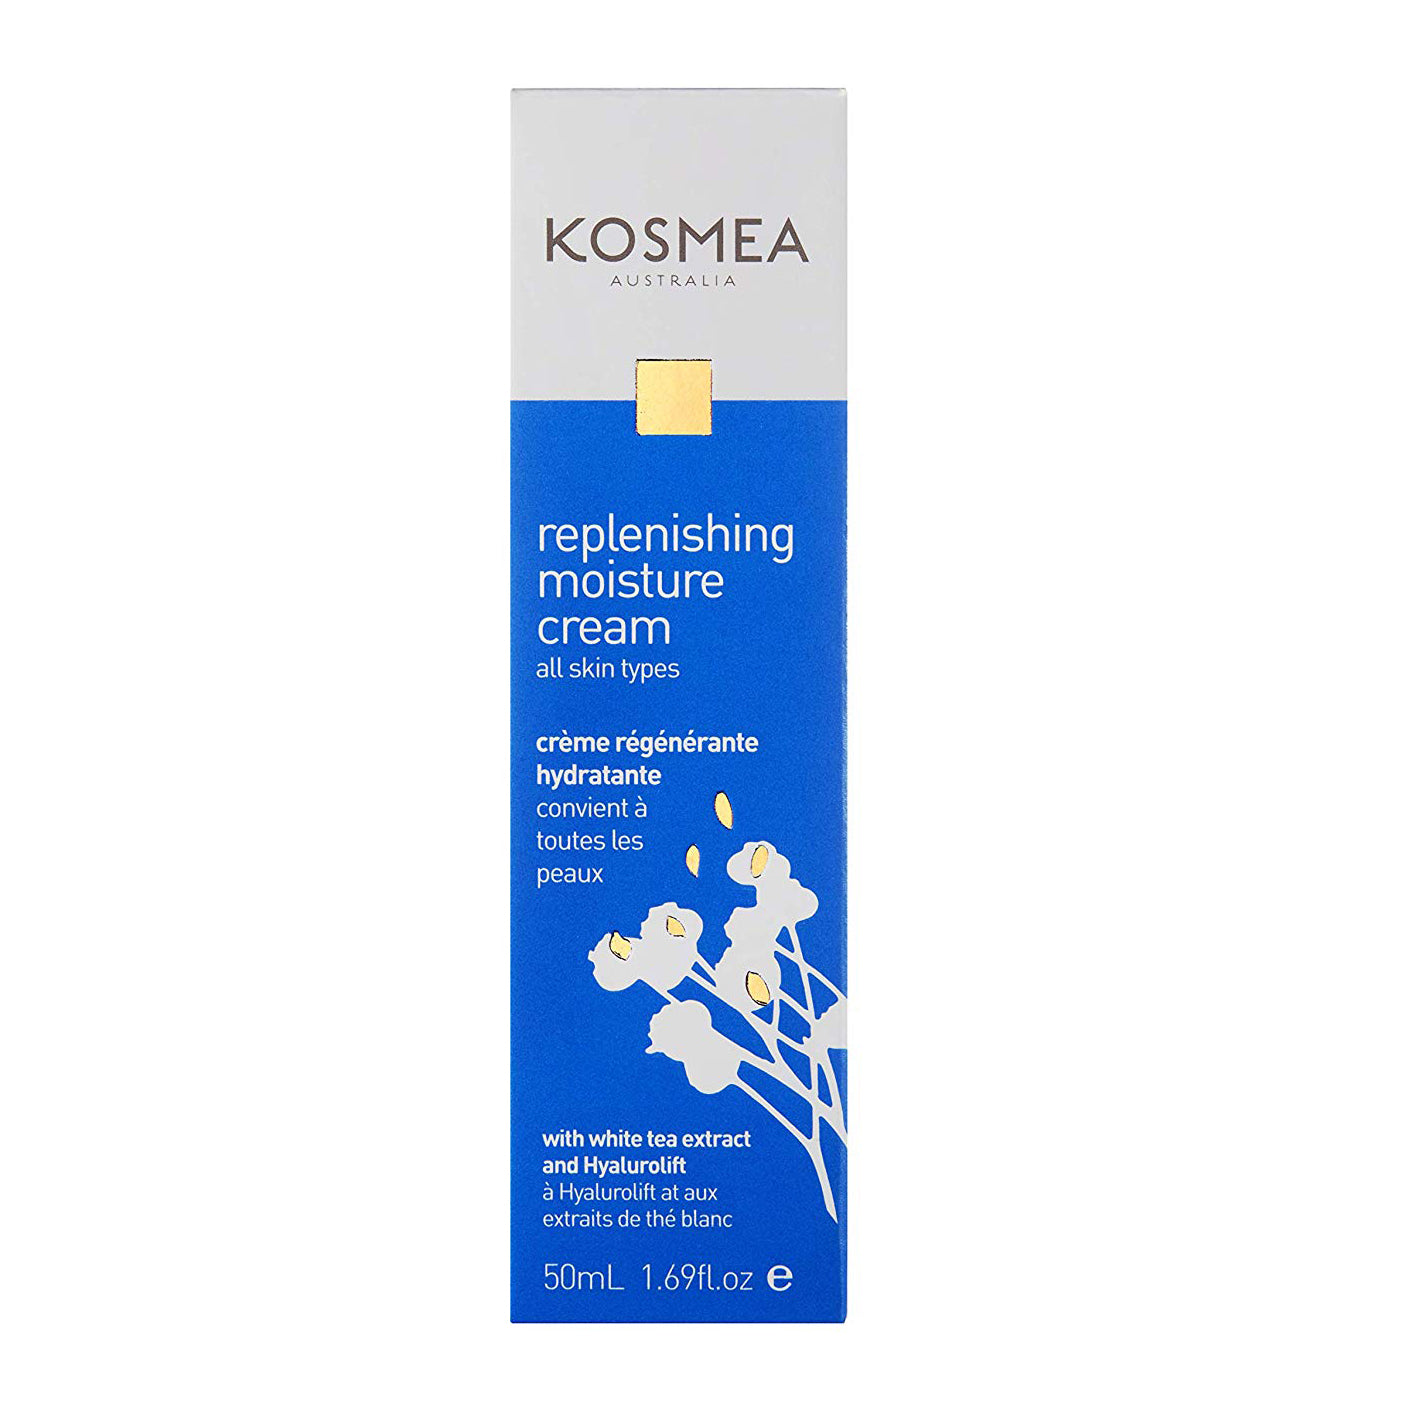 Kosmea Replenishing Moisture Cream 50ml Packaging Front View